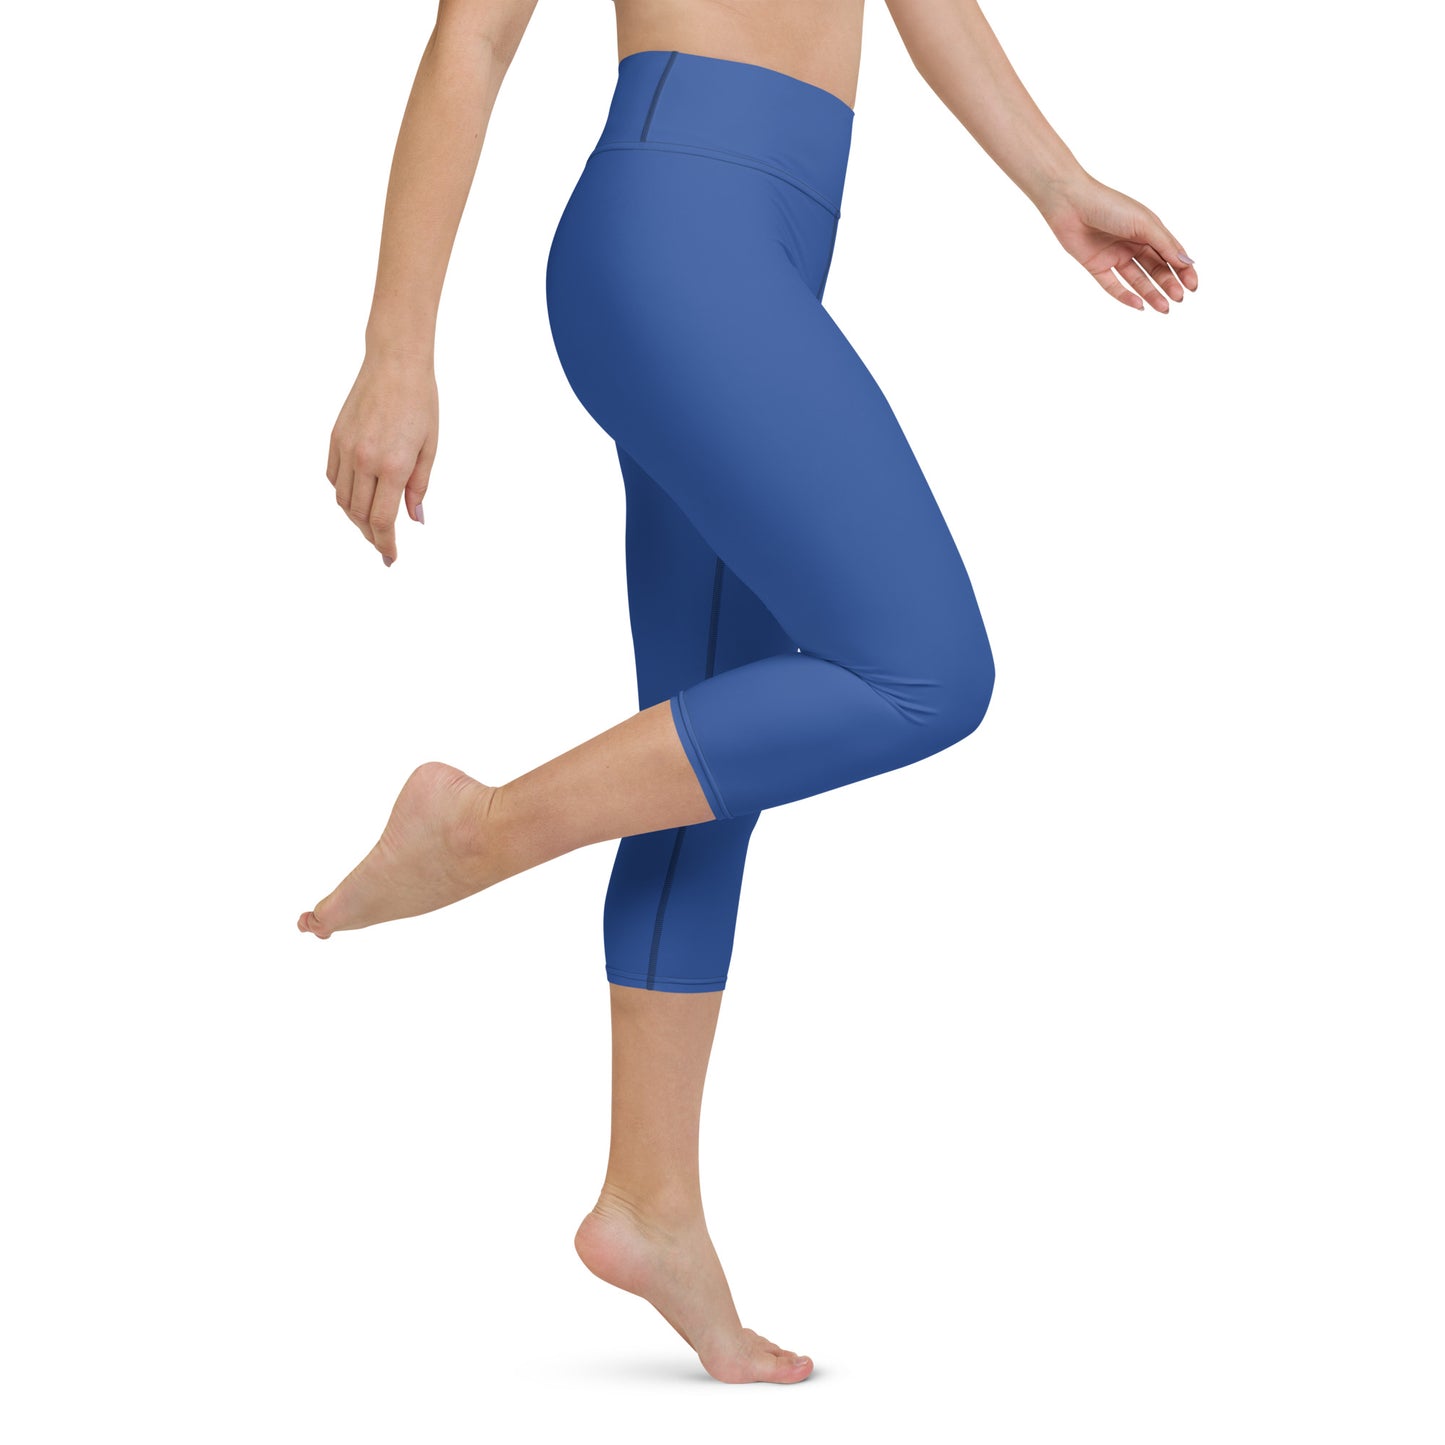 Ojos Solid Blue Capri High Waist Yoga Leggings / Pants with Inside Pocket